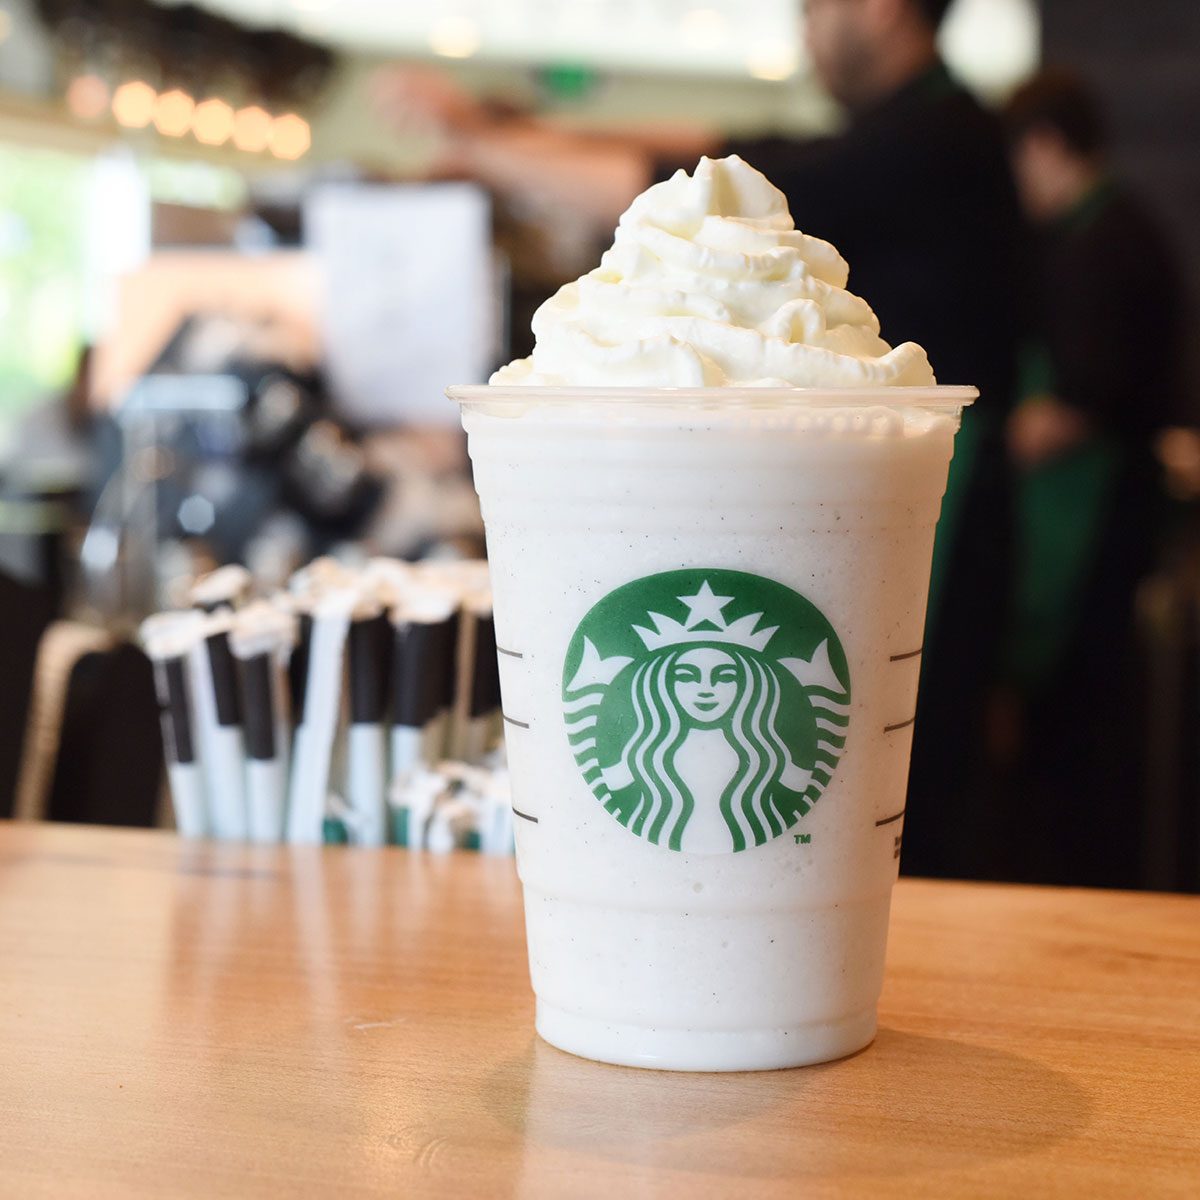 https://www.tasteofhome.com/wp-content/uploads/2020/02/Starbucks_Cupcake_Frappuccino-1.jpg